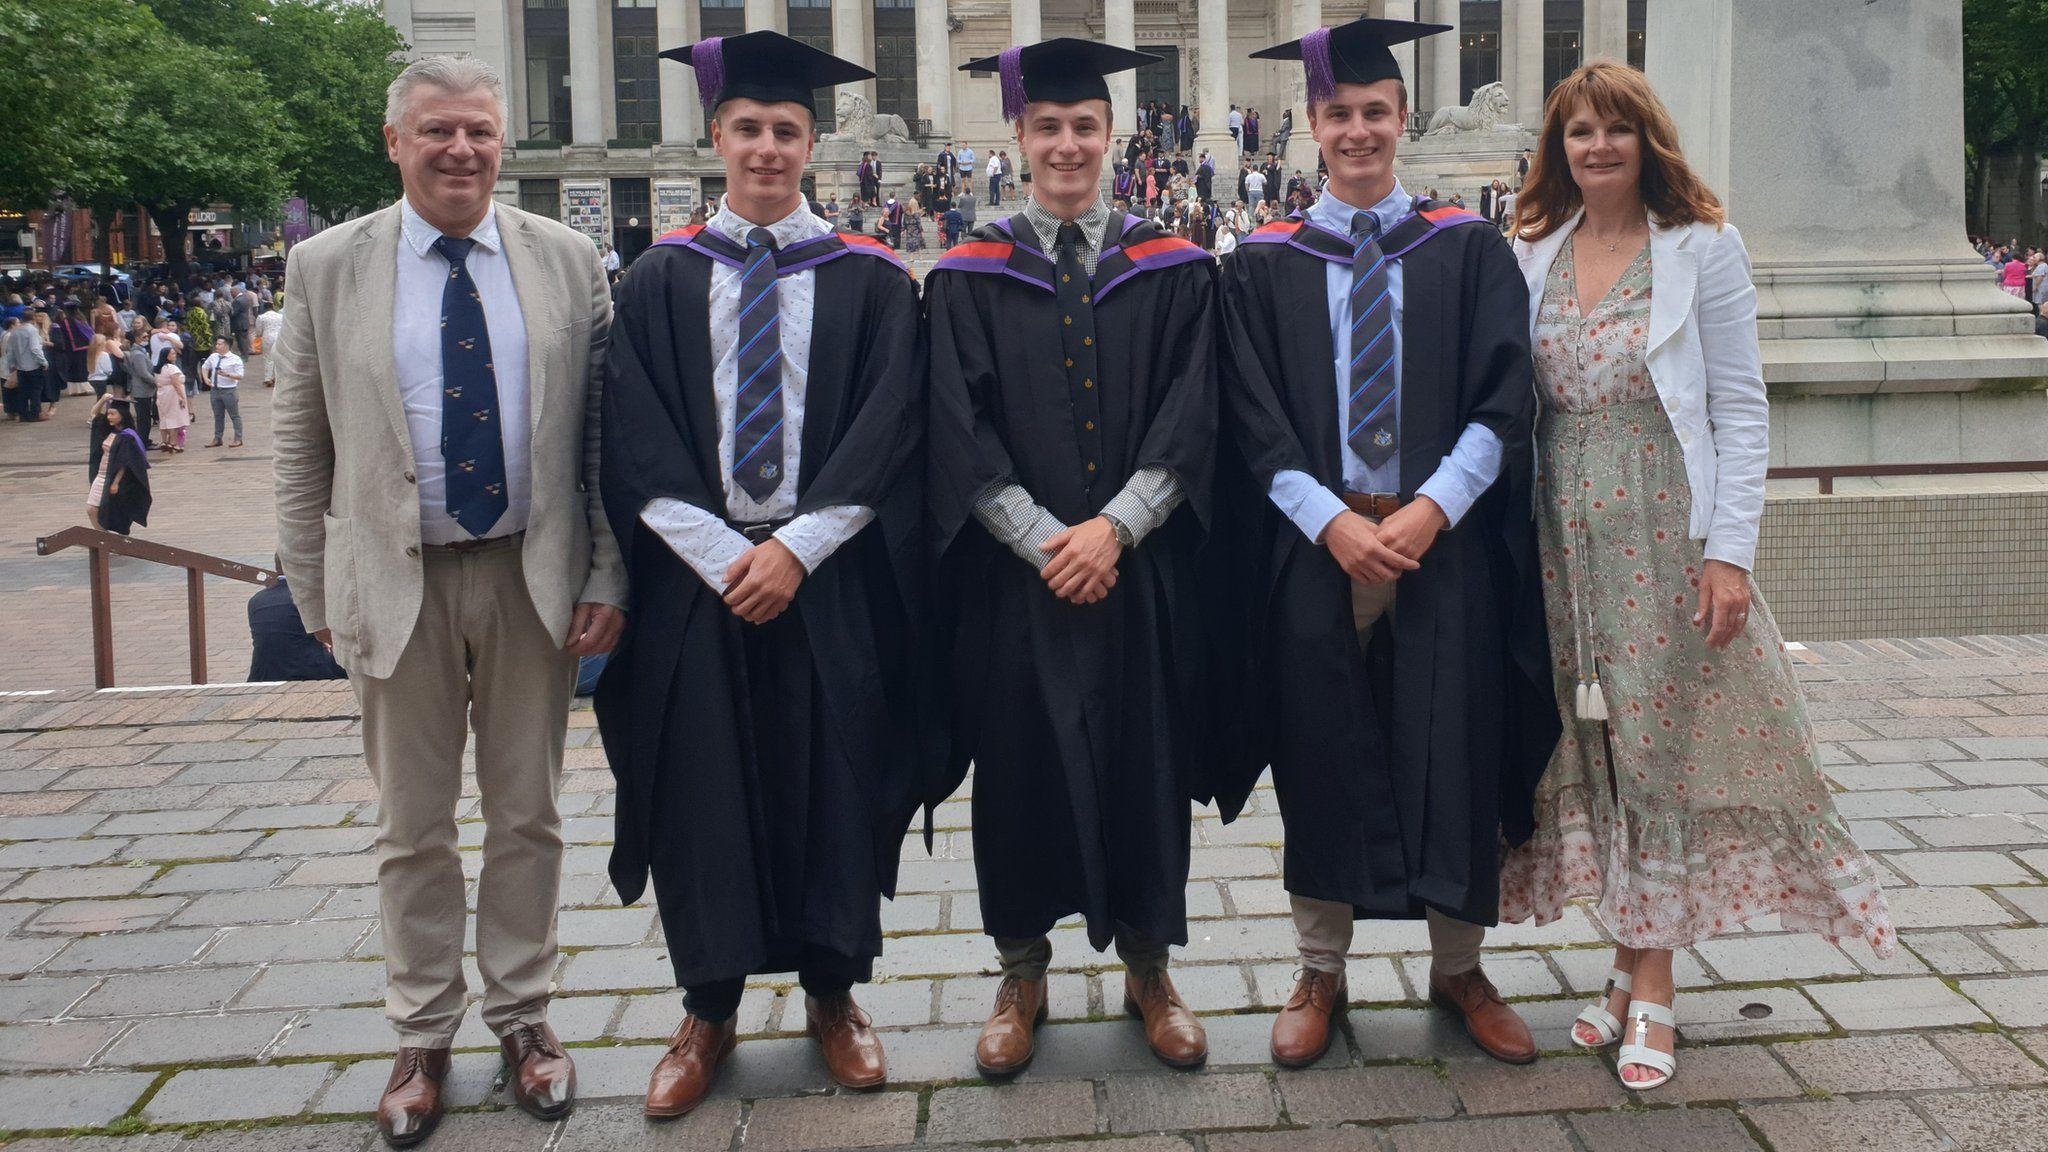 The White family at university graduation